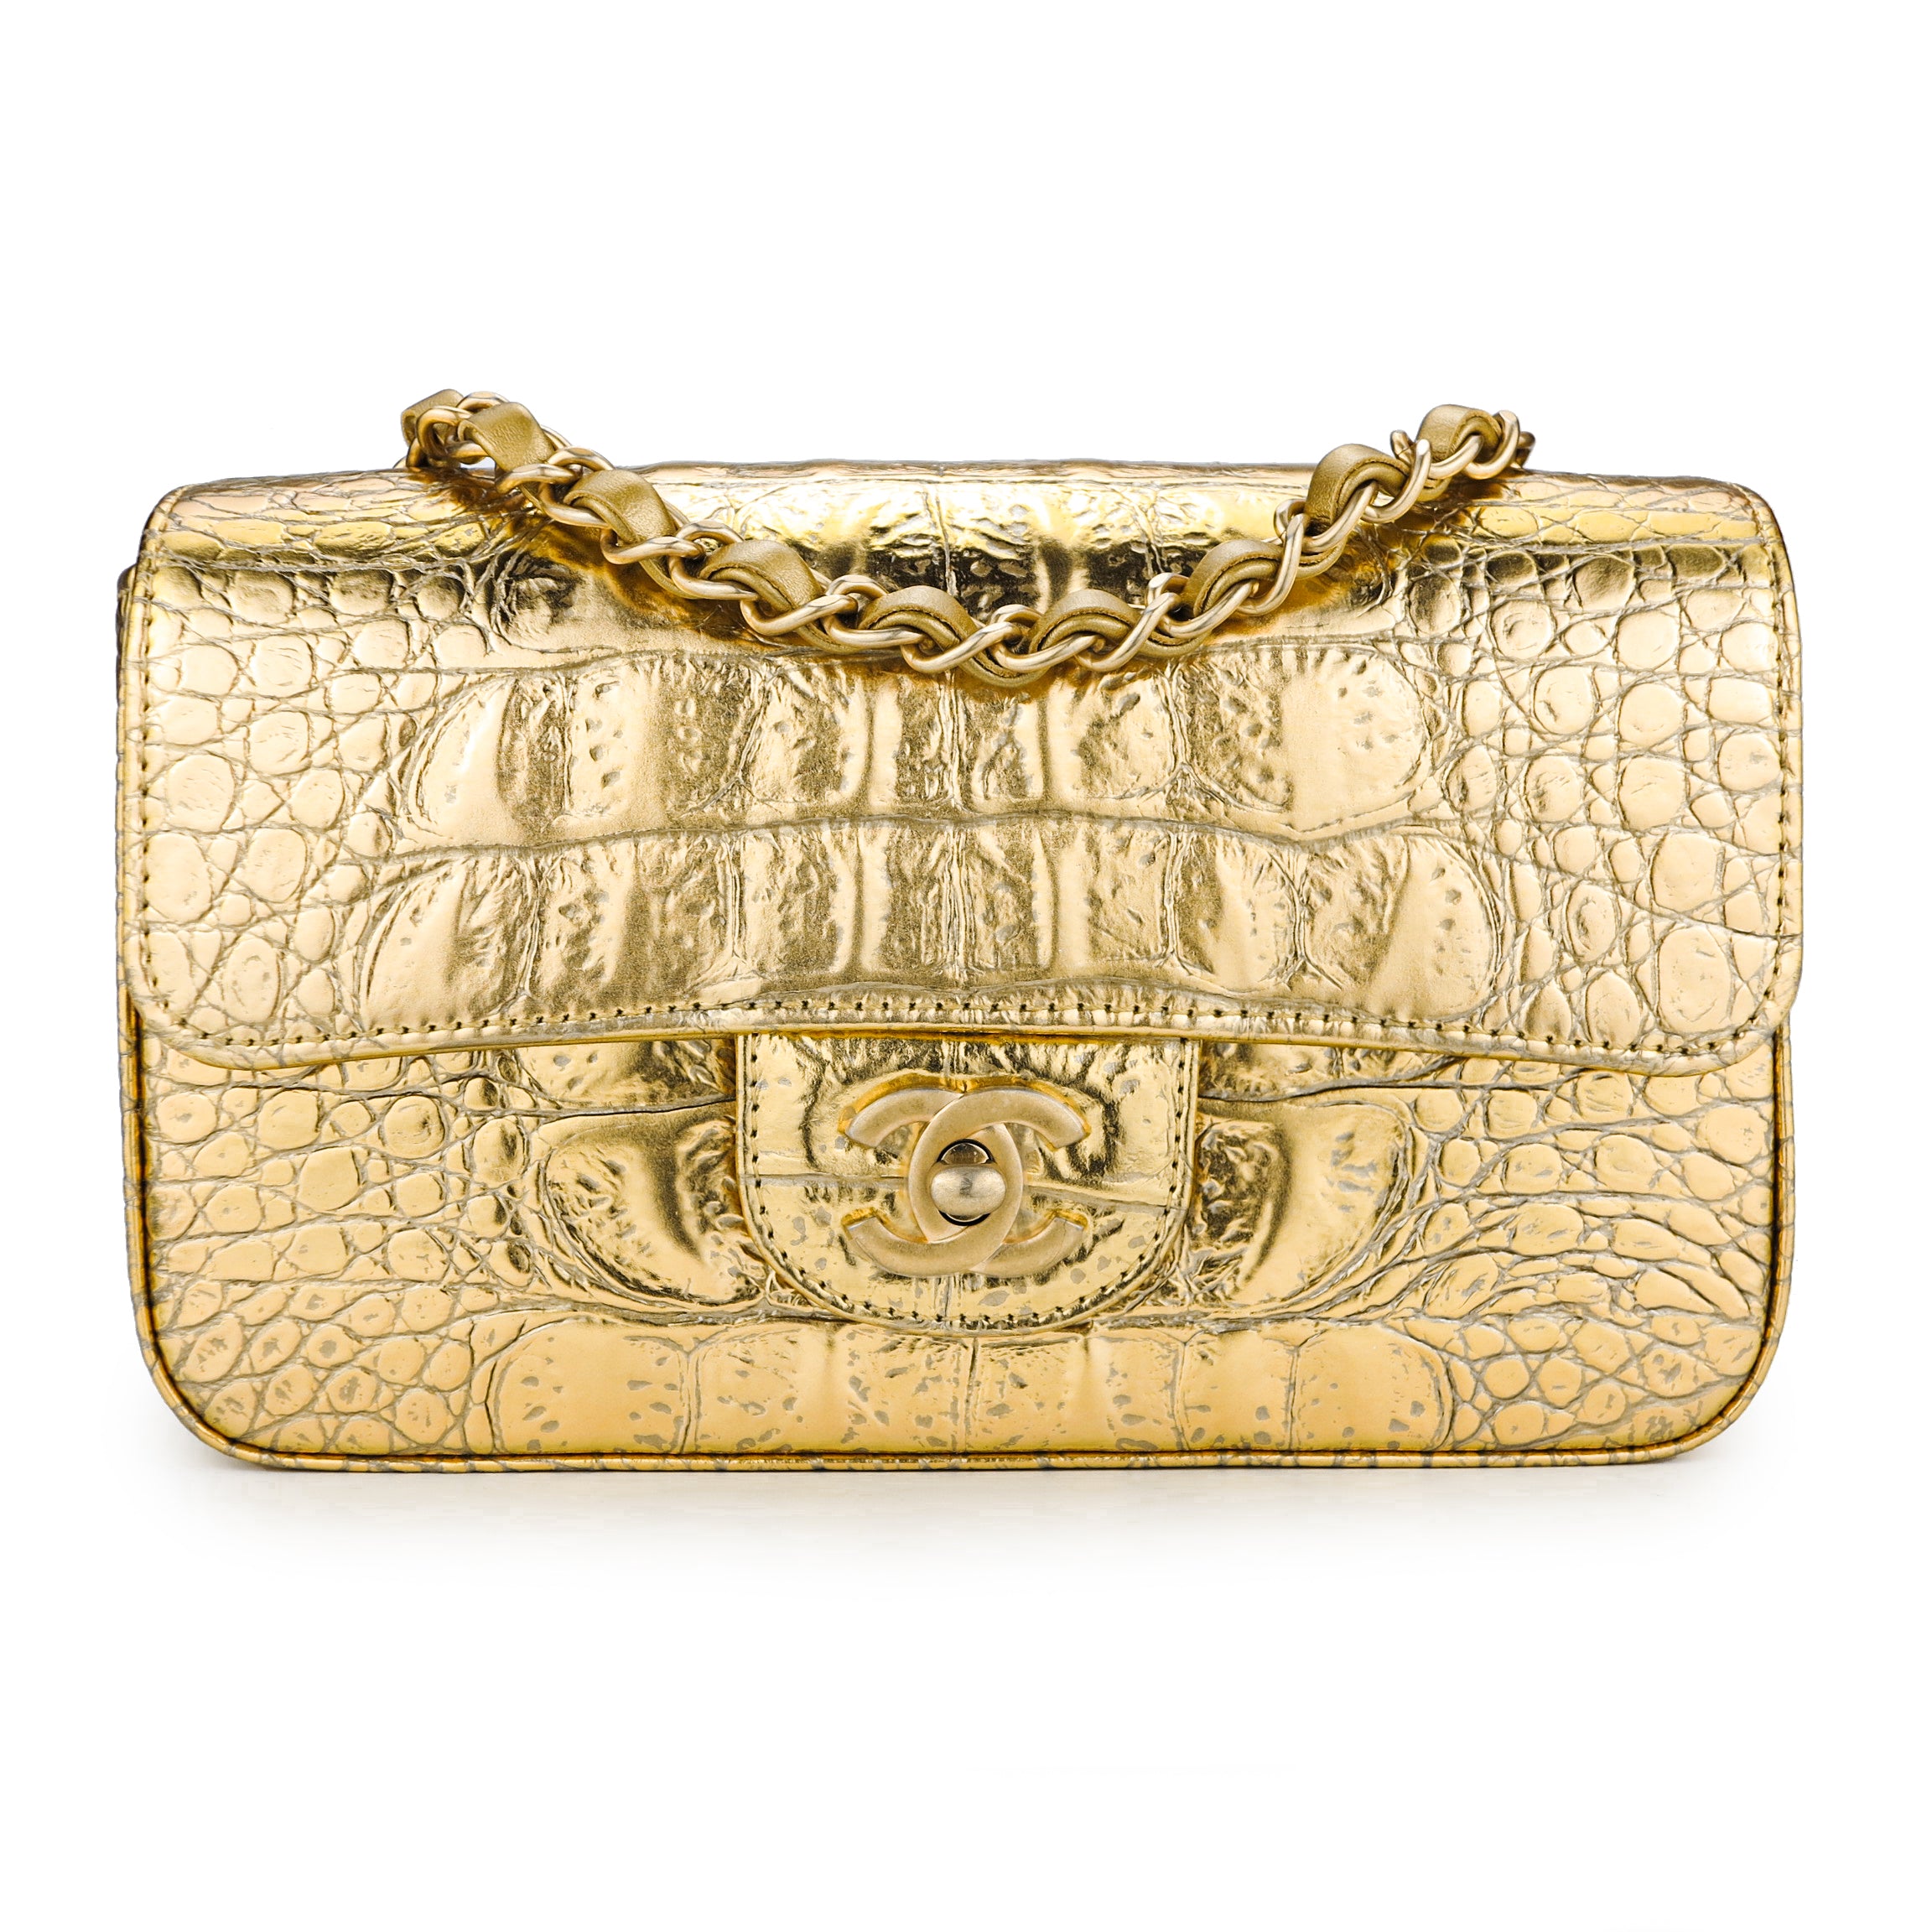 CHANEL Mini Rectangular Flap Bag in Gold Croc Embossed